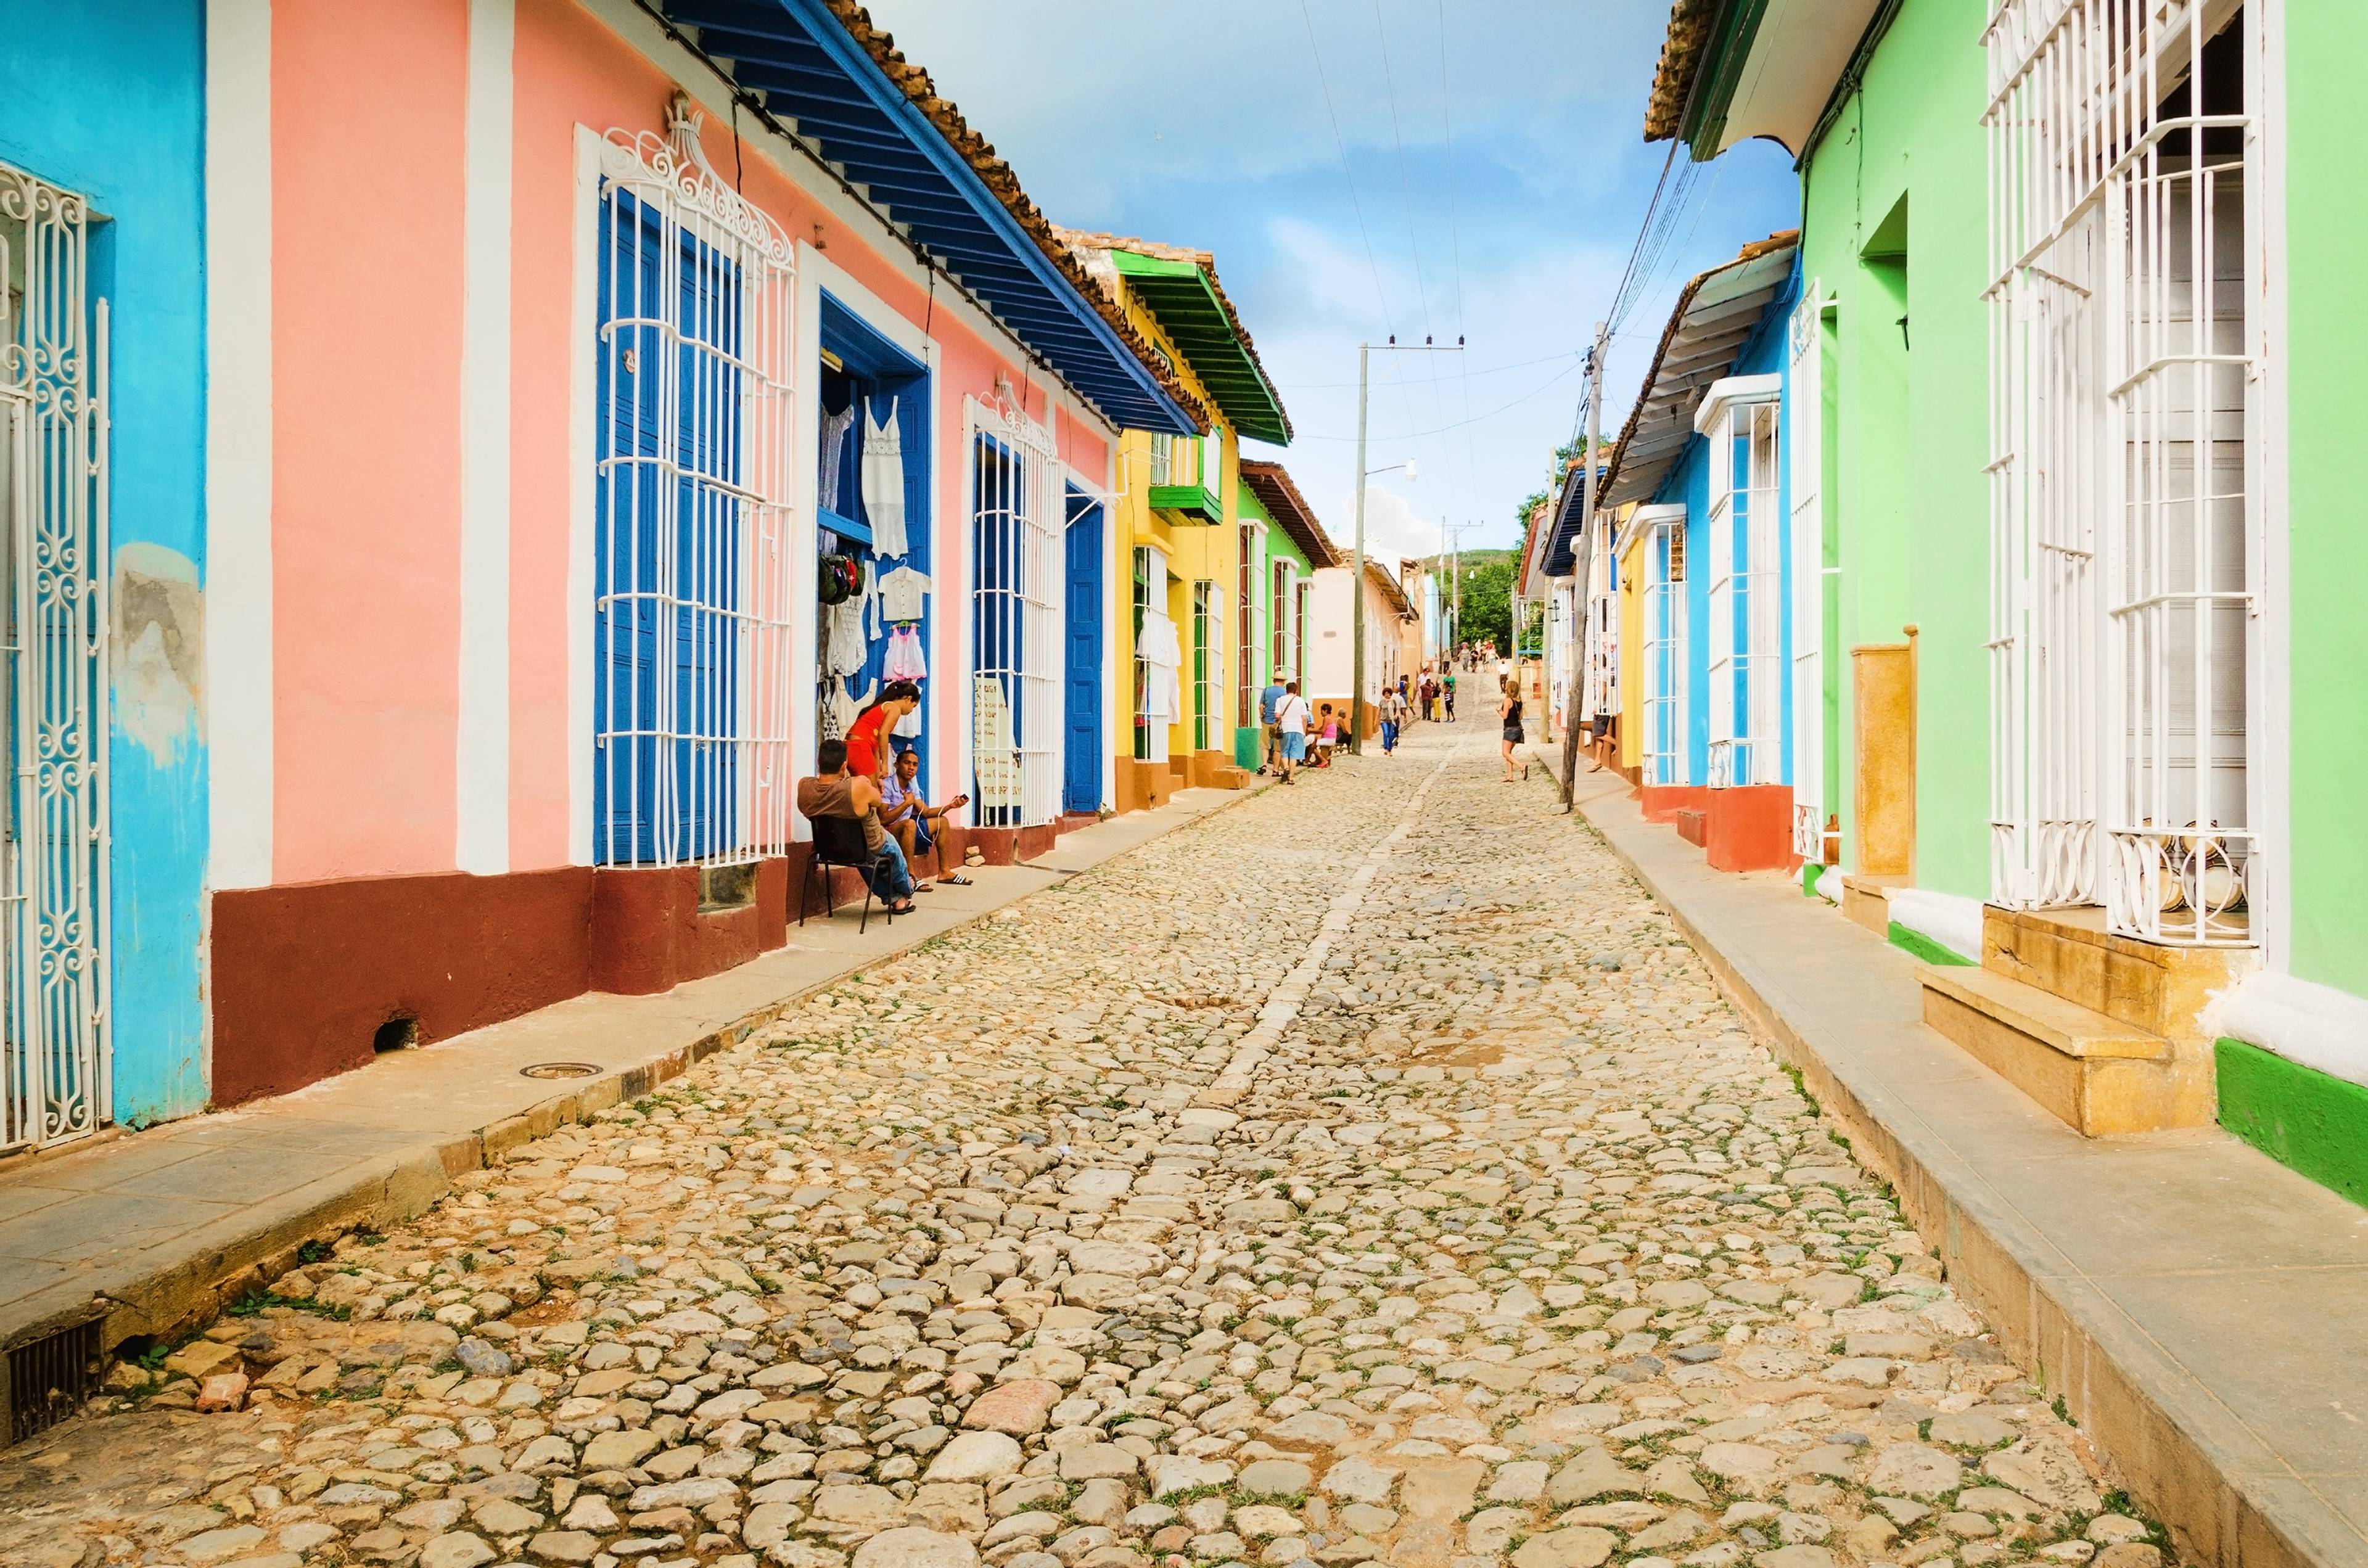 Case colorate di Trinidad